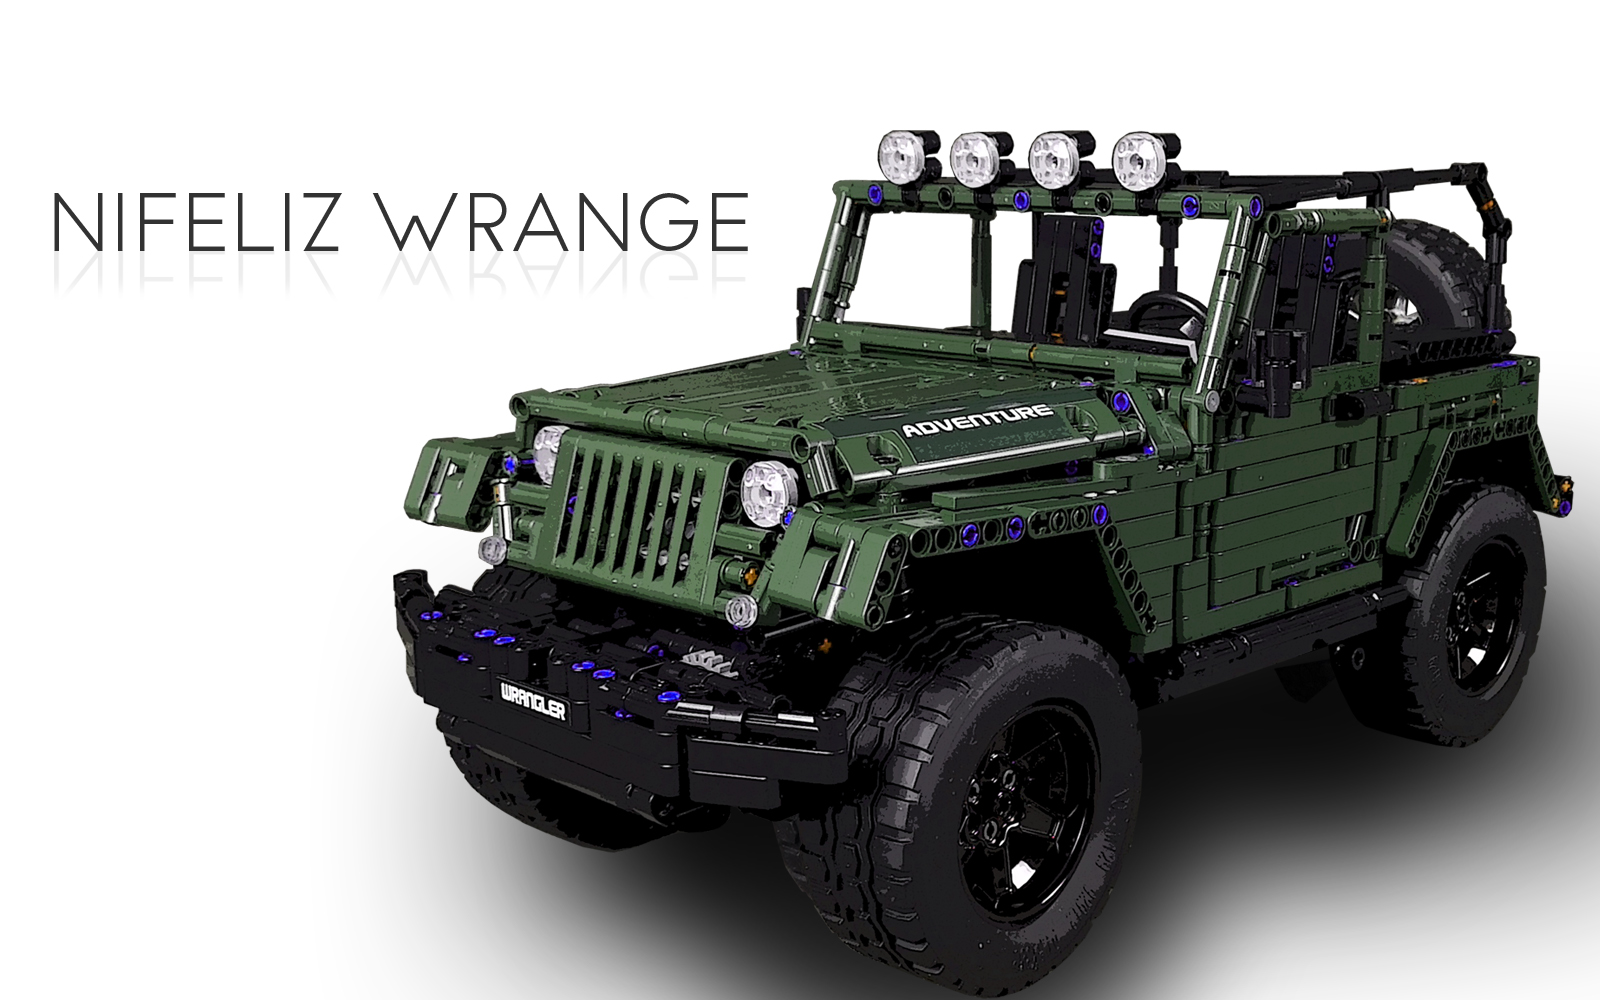 News & Videos - Nifeliz Jeep Wrangler is in stock now!